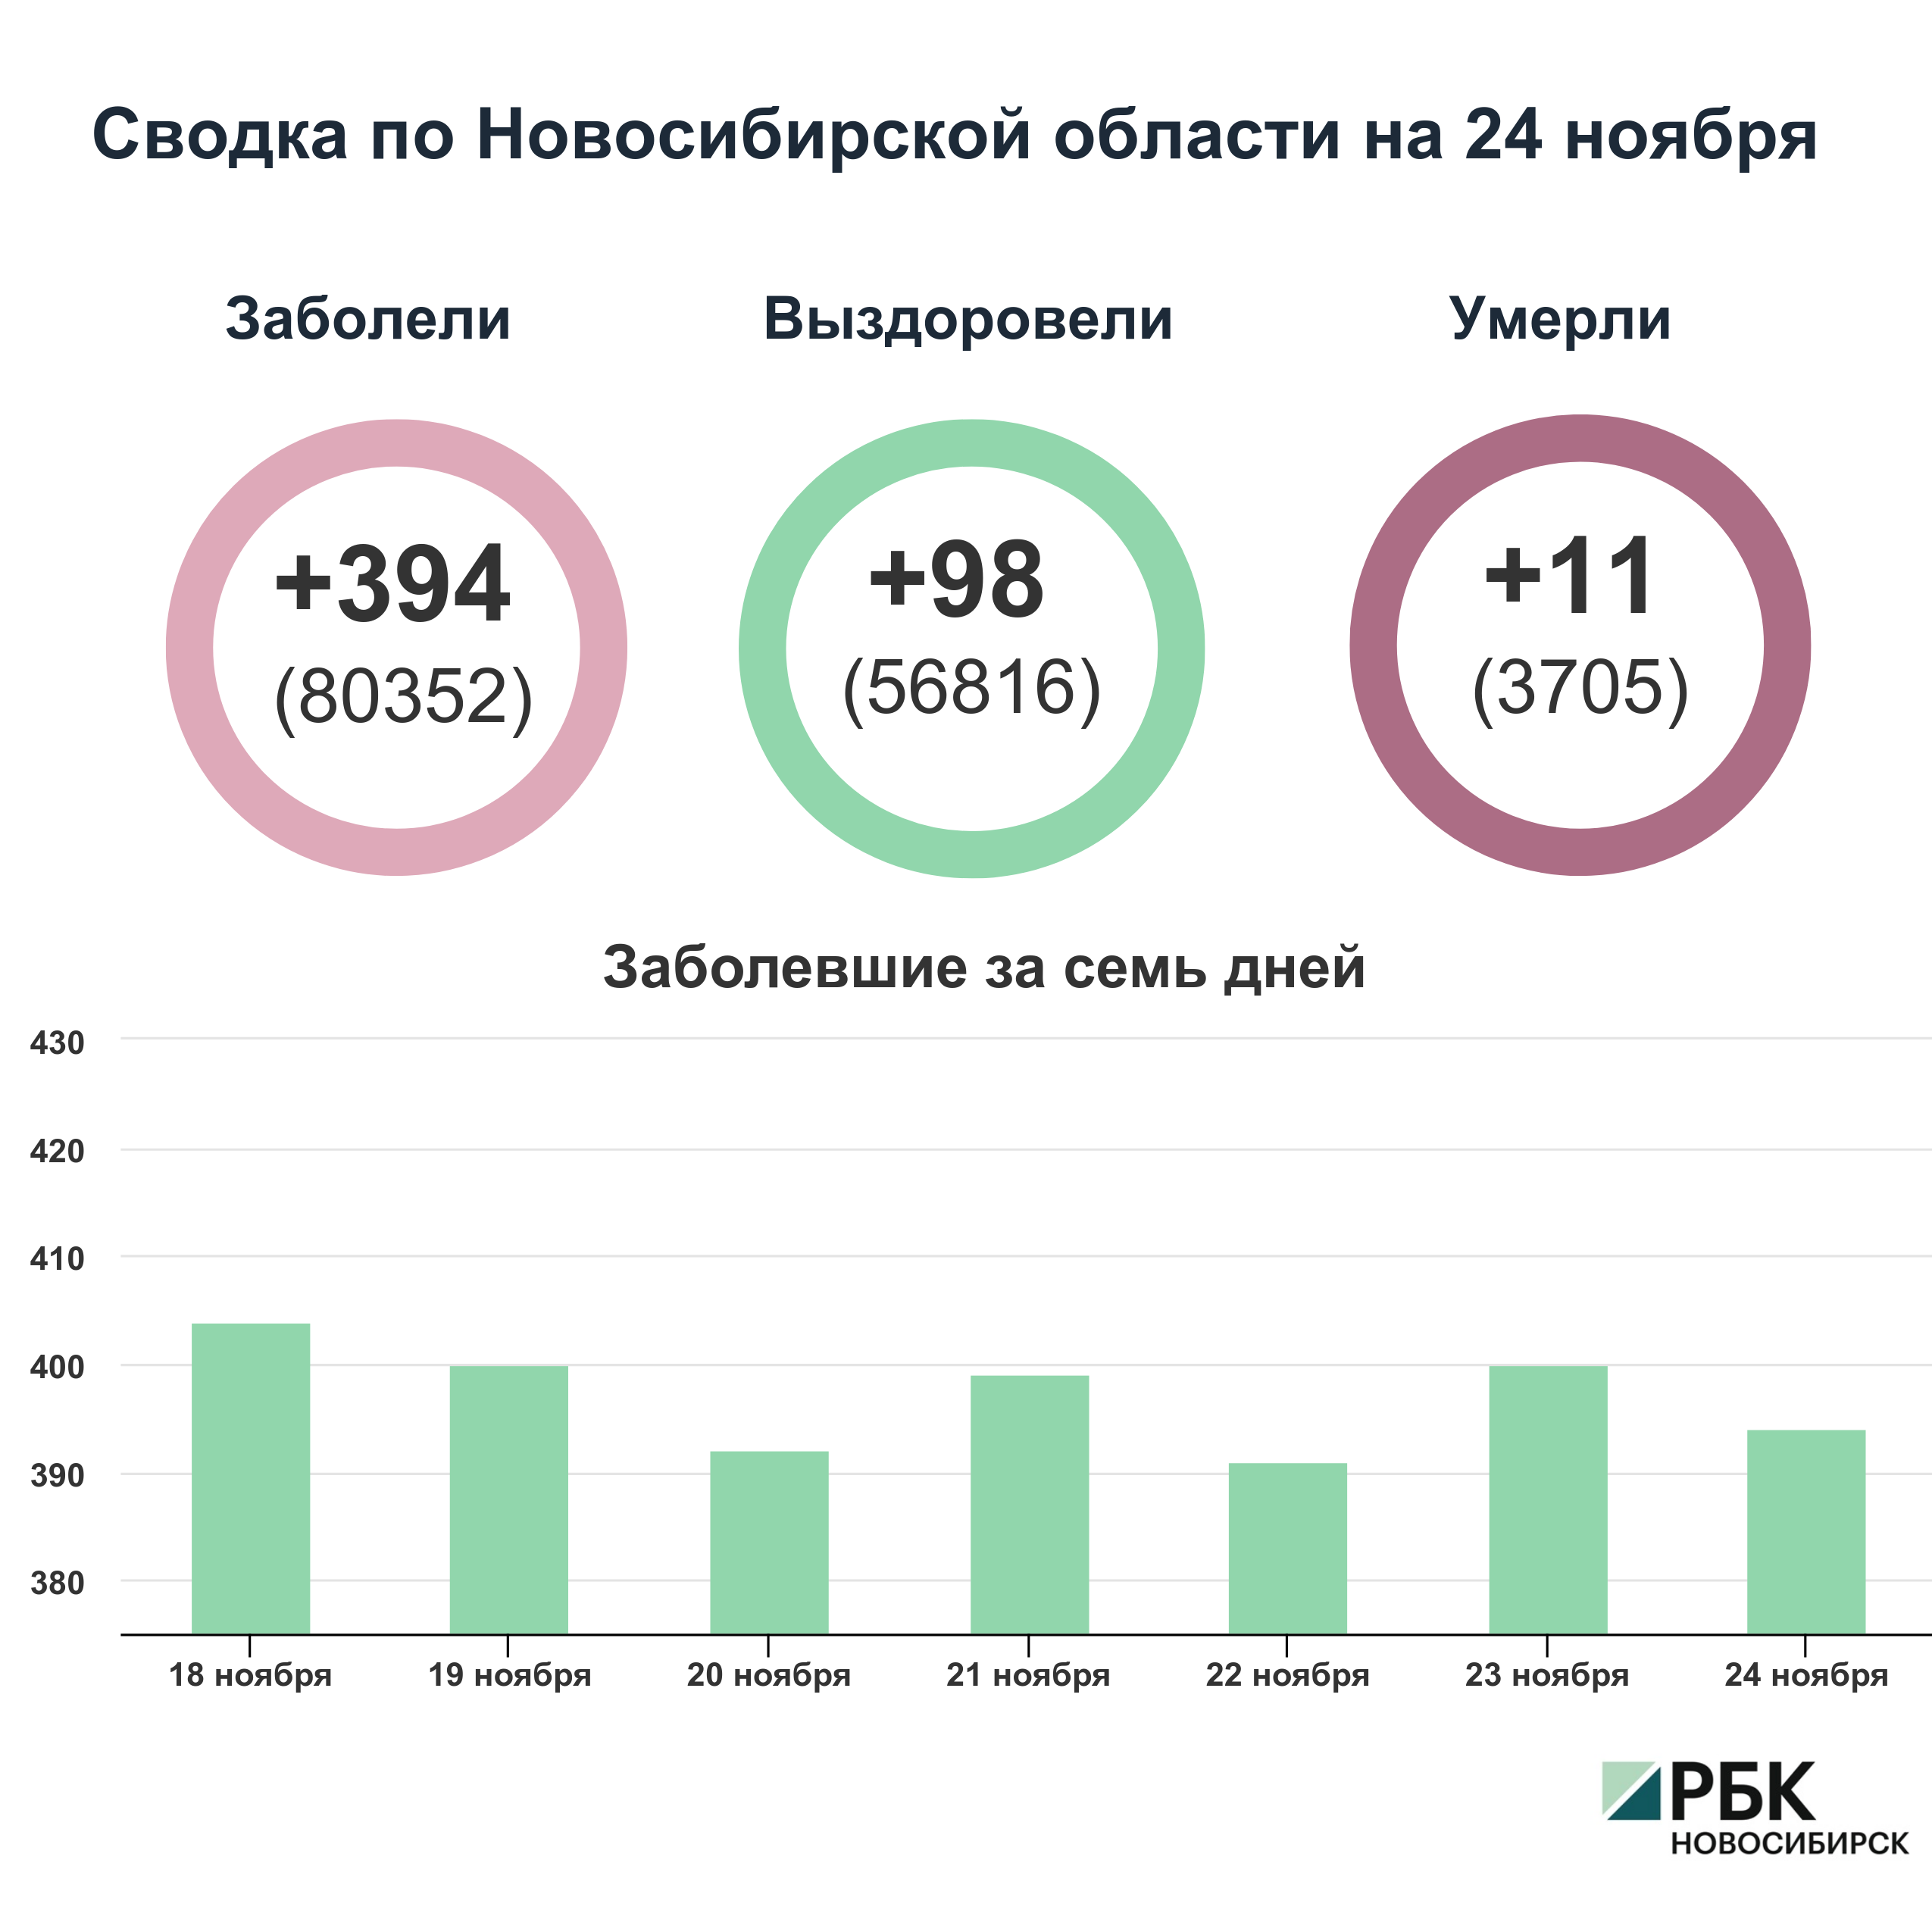 Коронавирус в Новосибирске: сводка на 24 ноября